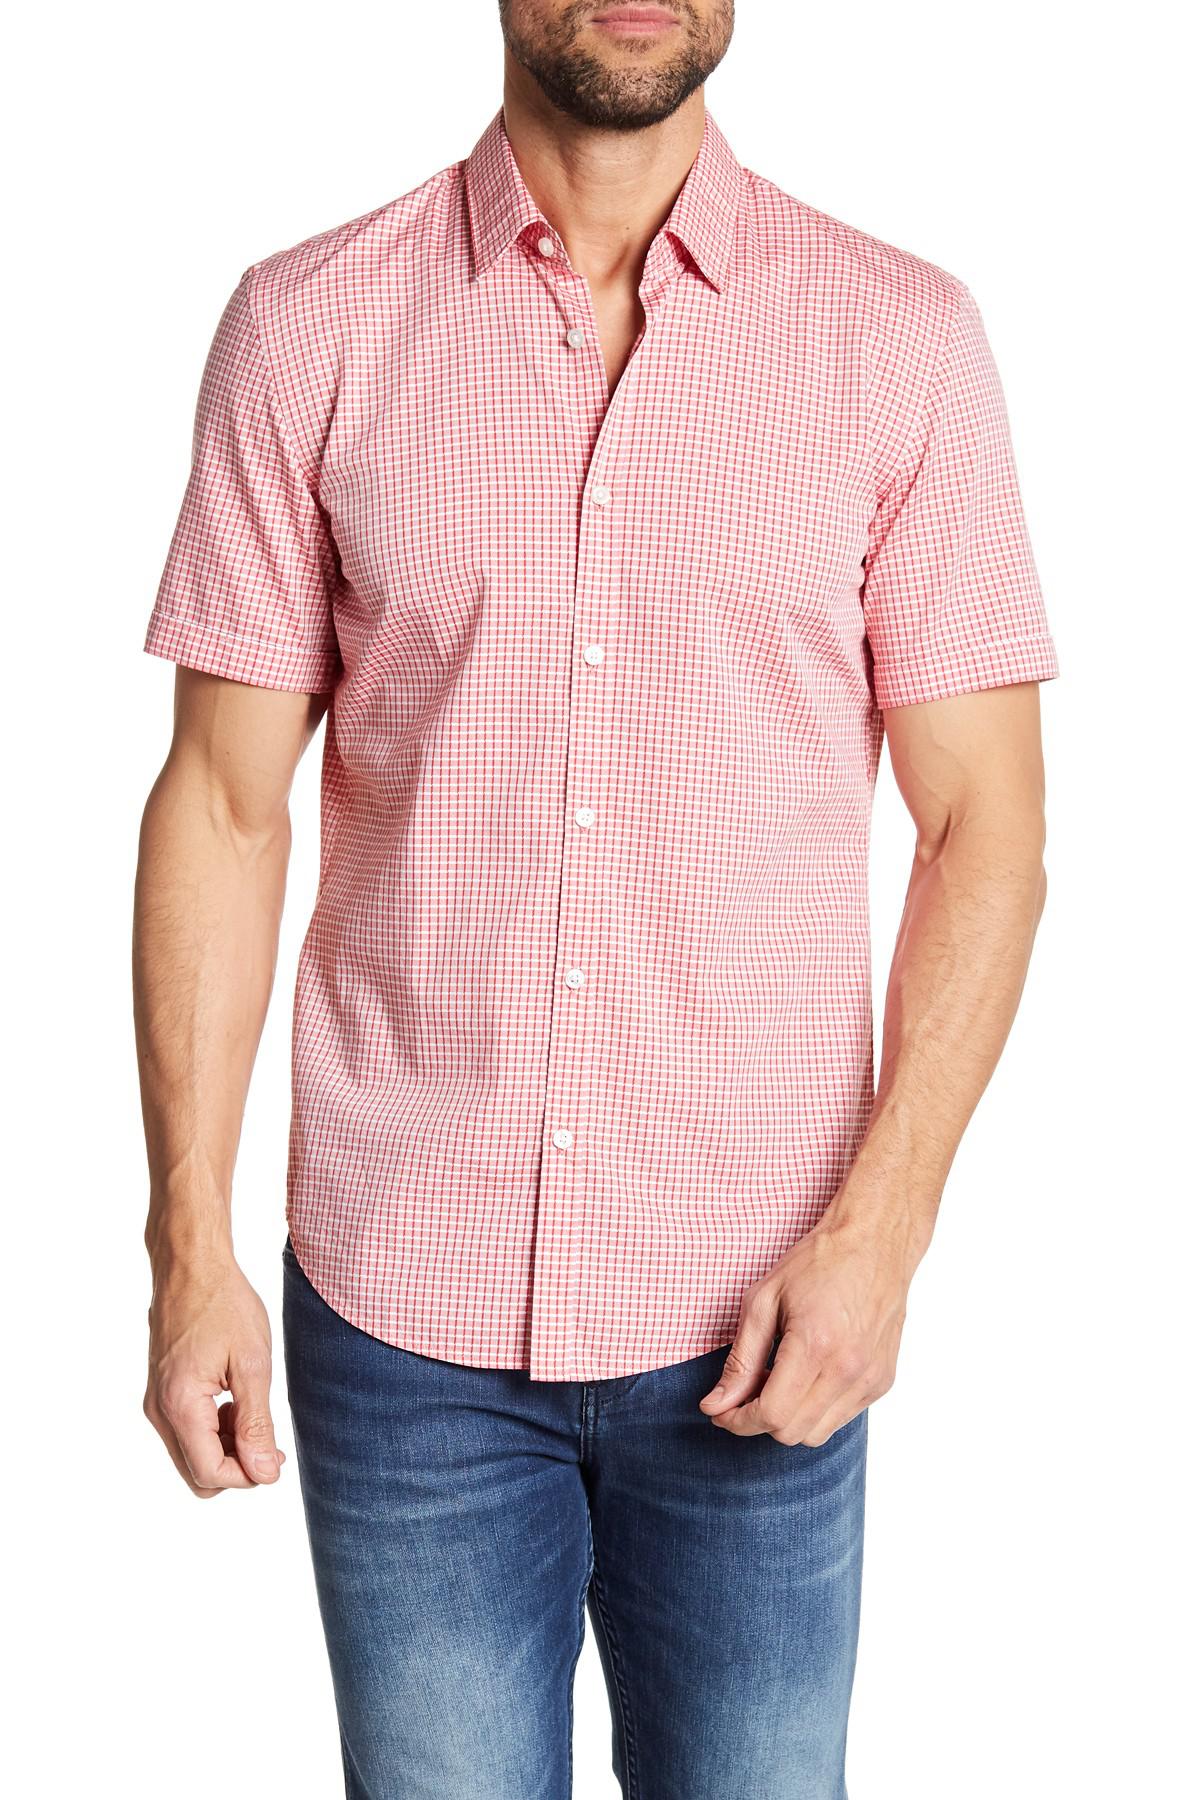 BOSS Cotton Ronn Short Sleeve Slim Fit Shirt in Pink for Men - Lyst